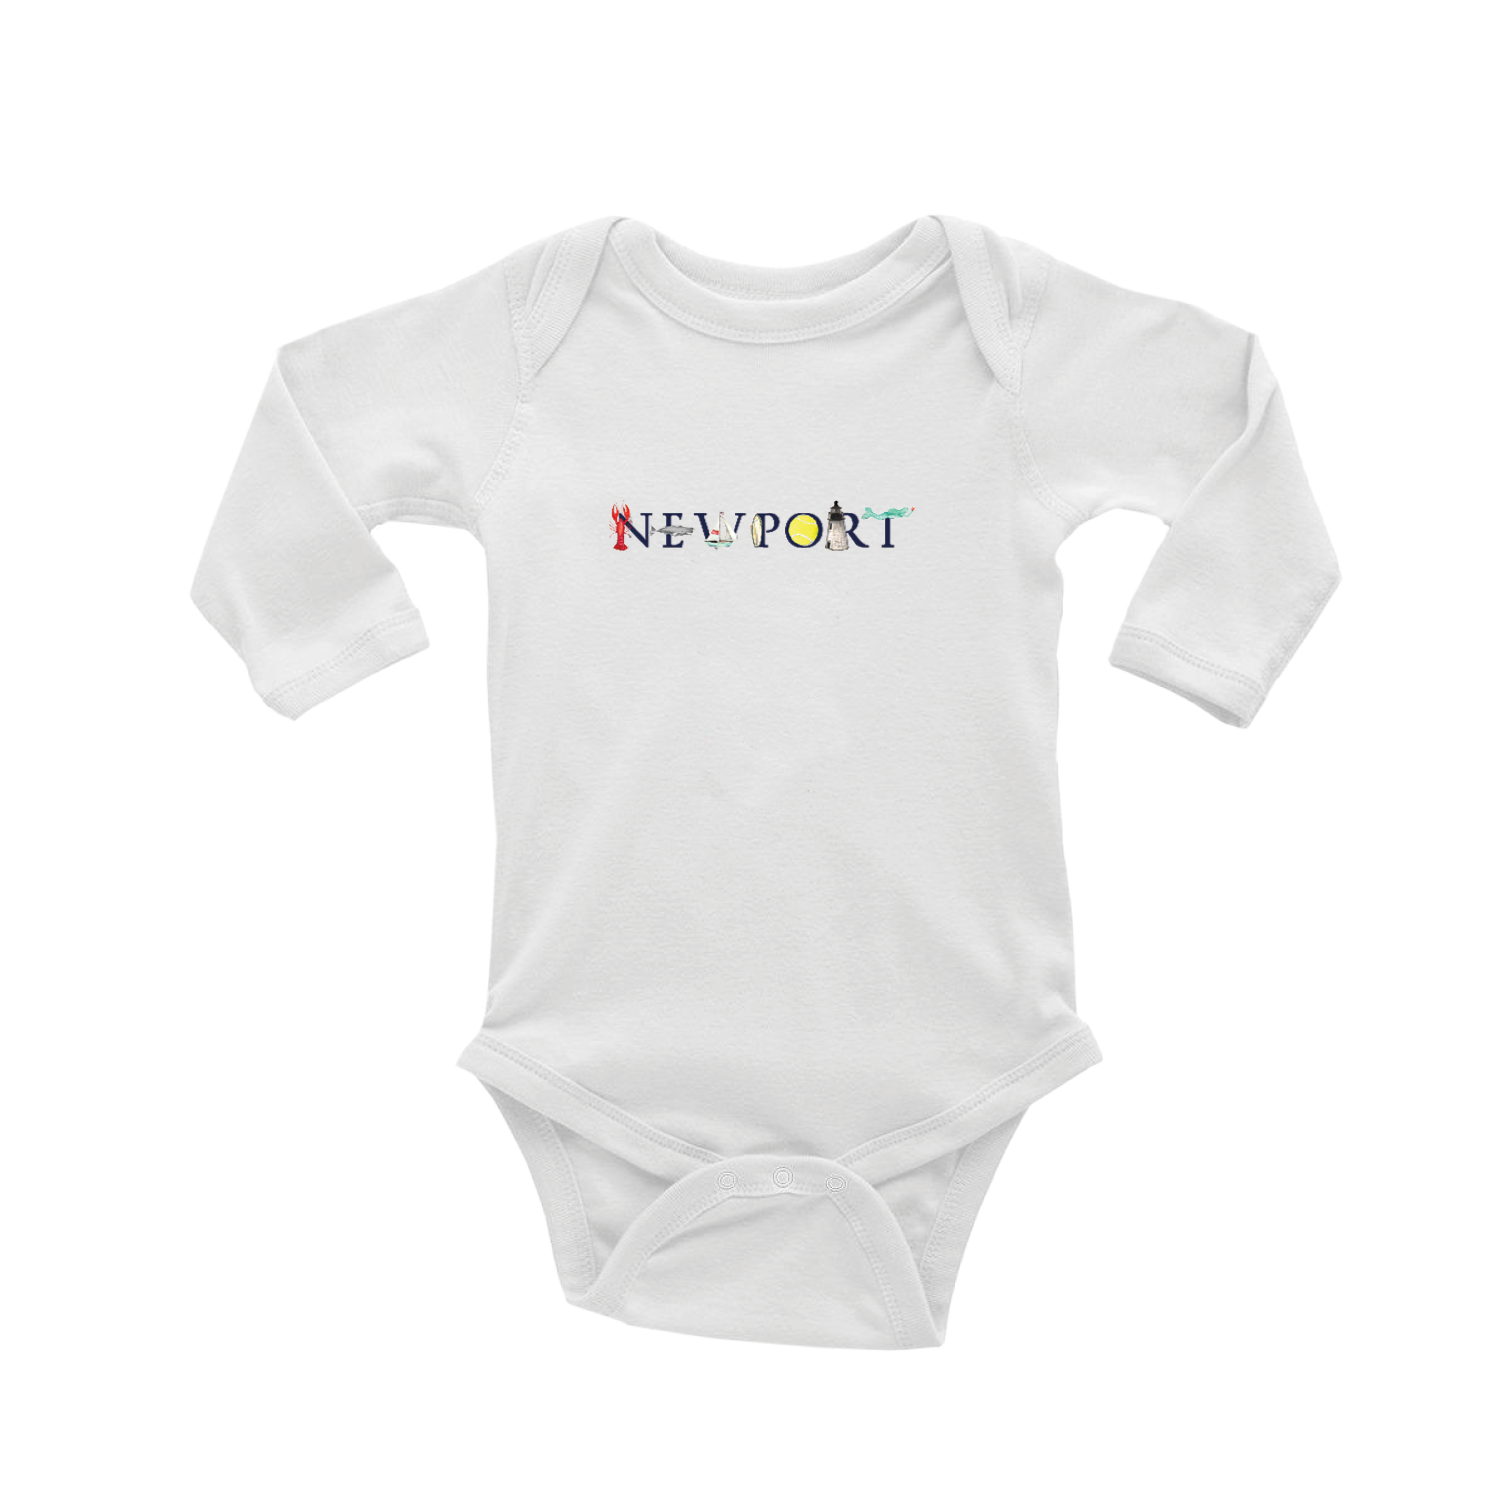 Newport baby snap up long sleeve